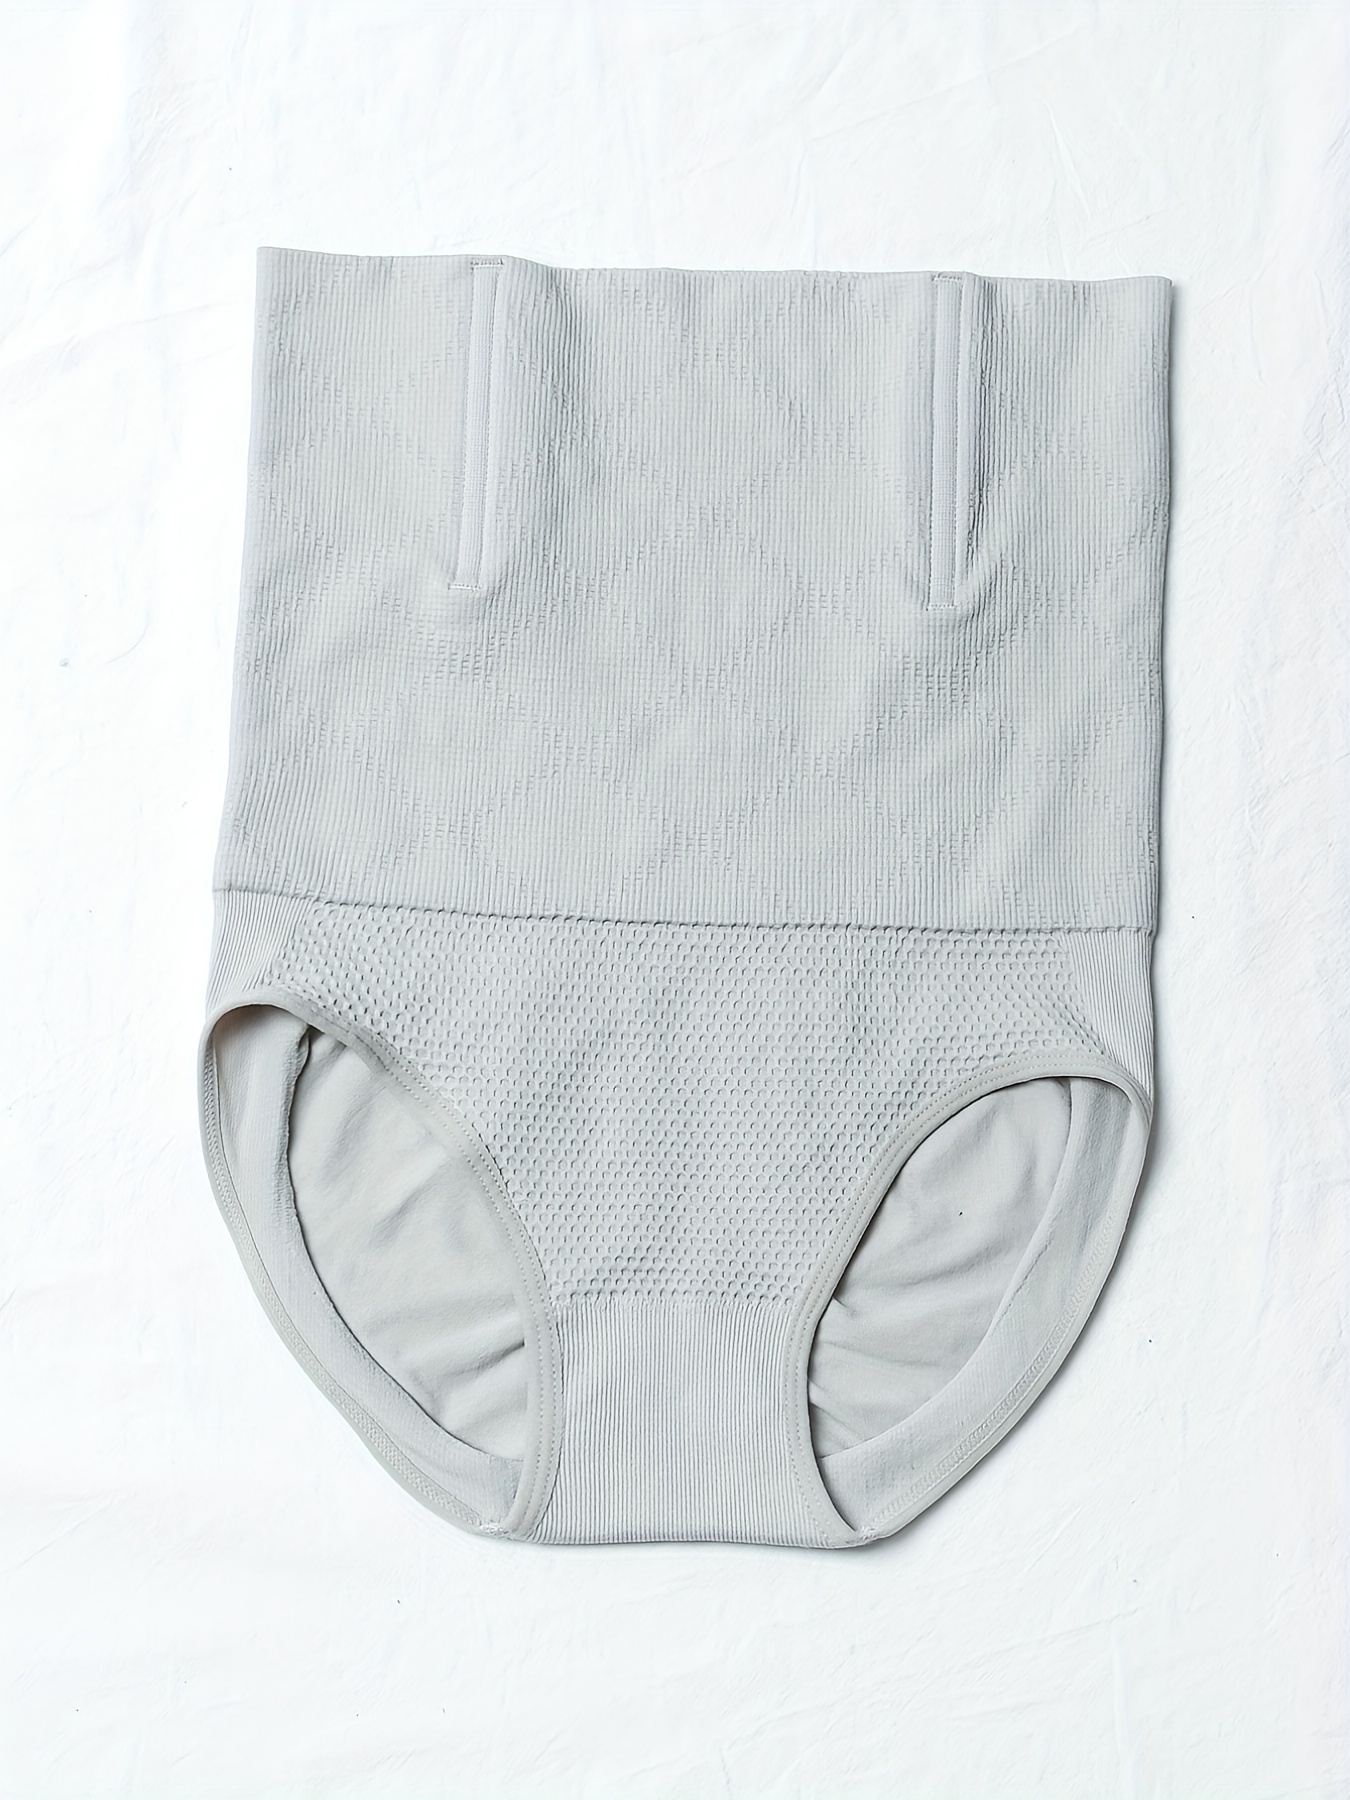 New Amberoxus Elashape High Waisted Tummy Control Pants Fiber Restoration  Shaper Slimming Underwear For Women Bodyshaper Panties